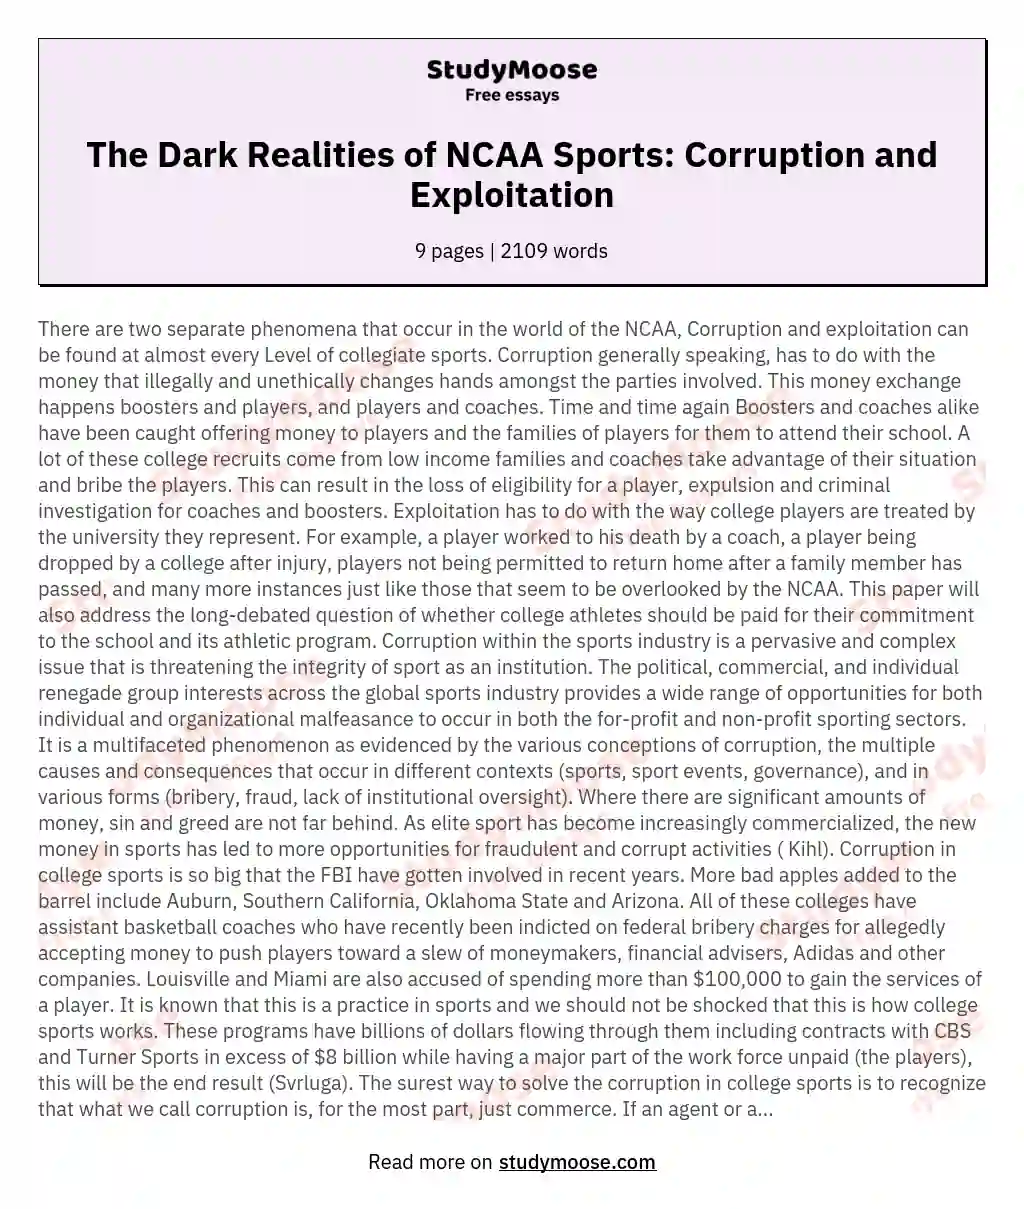 The Dark Realities of NCAA Sports: Corruption and Exploitation essay